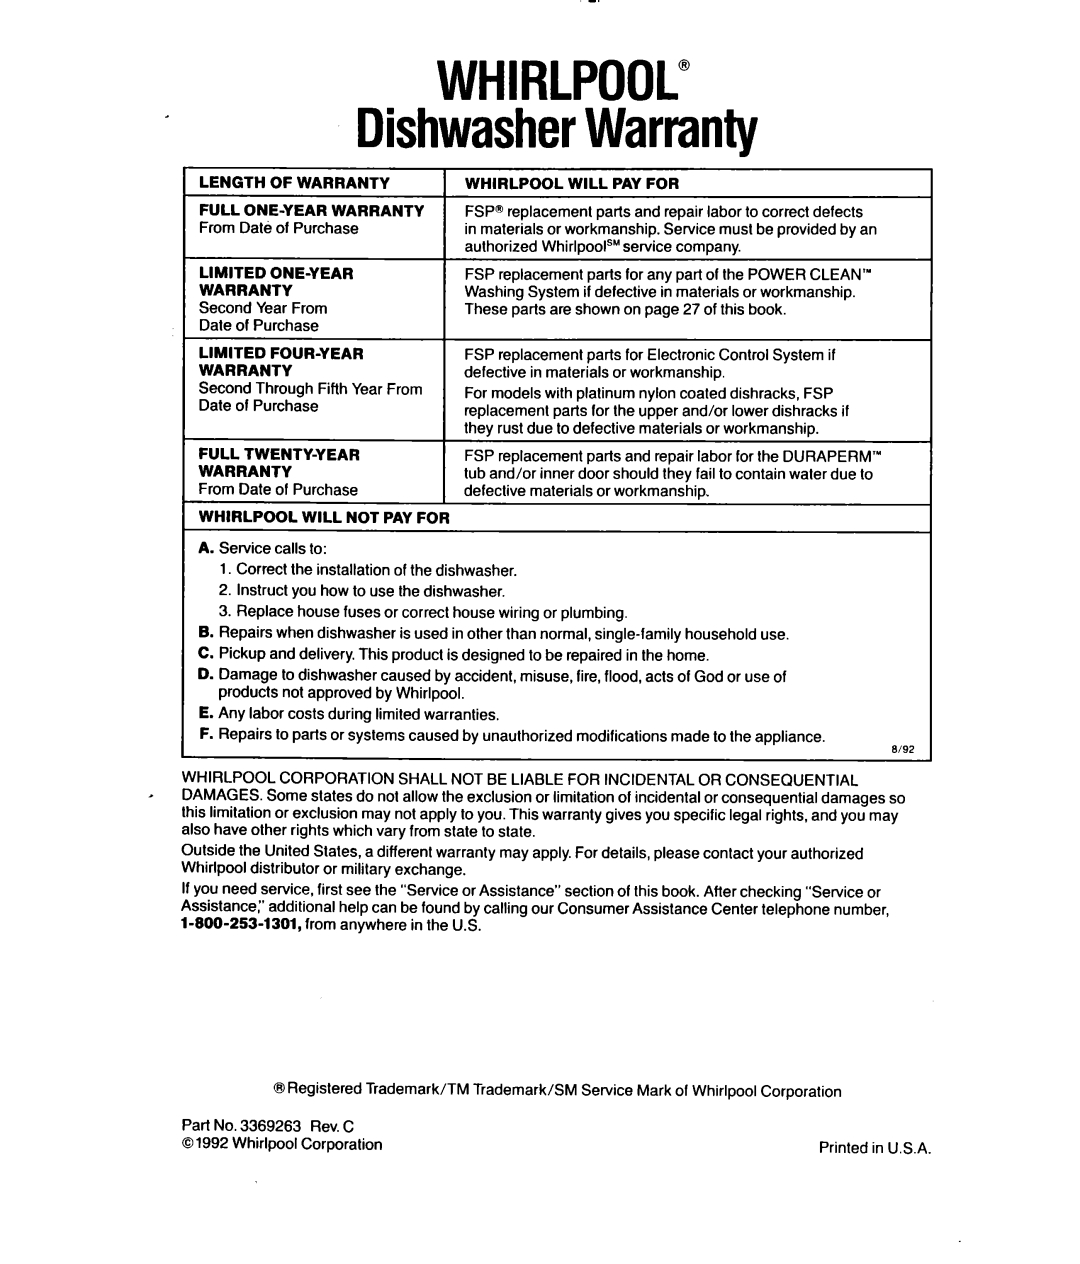 Whirlpool 9700 manual WHIRLPOOL” DishwasherWarranty 